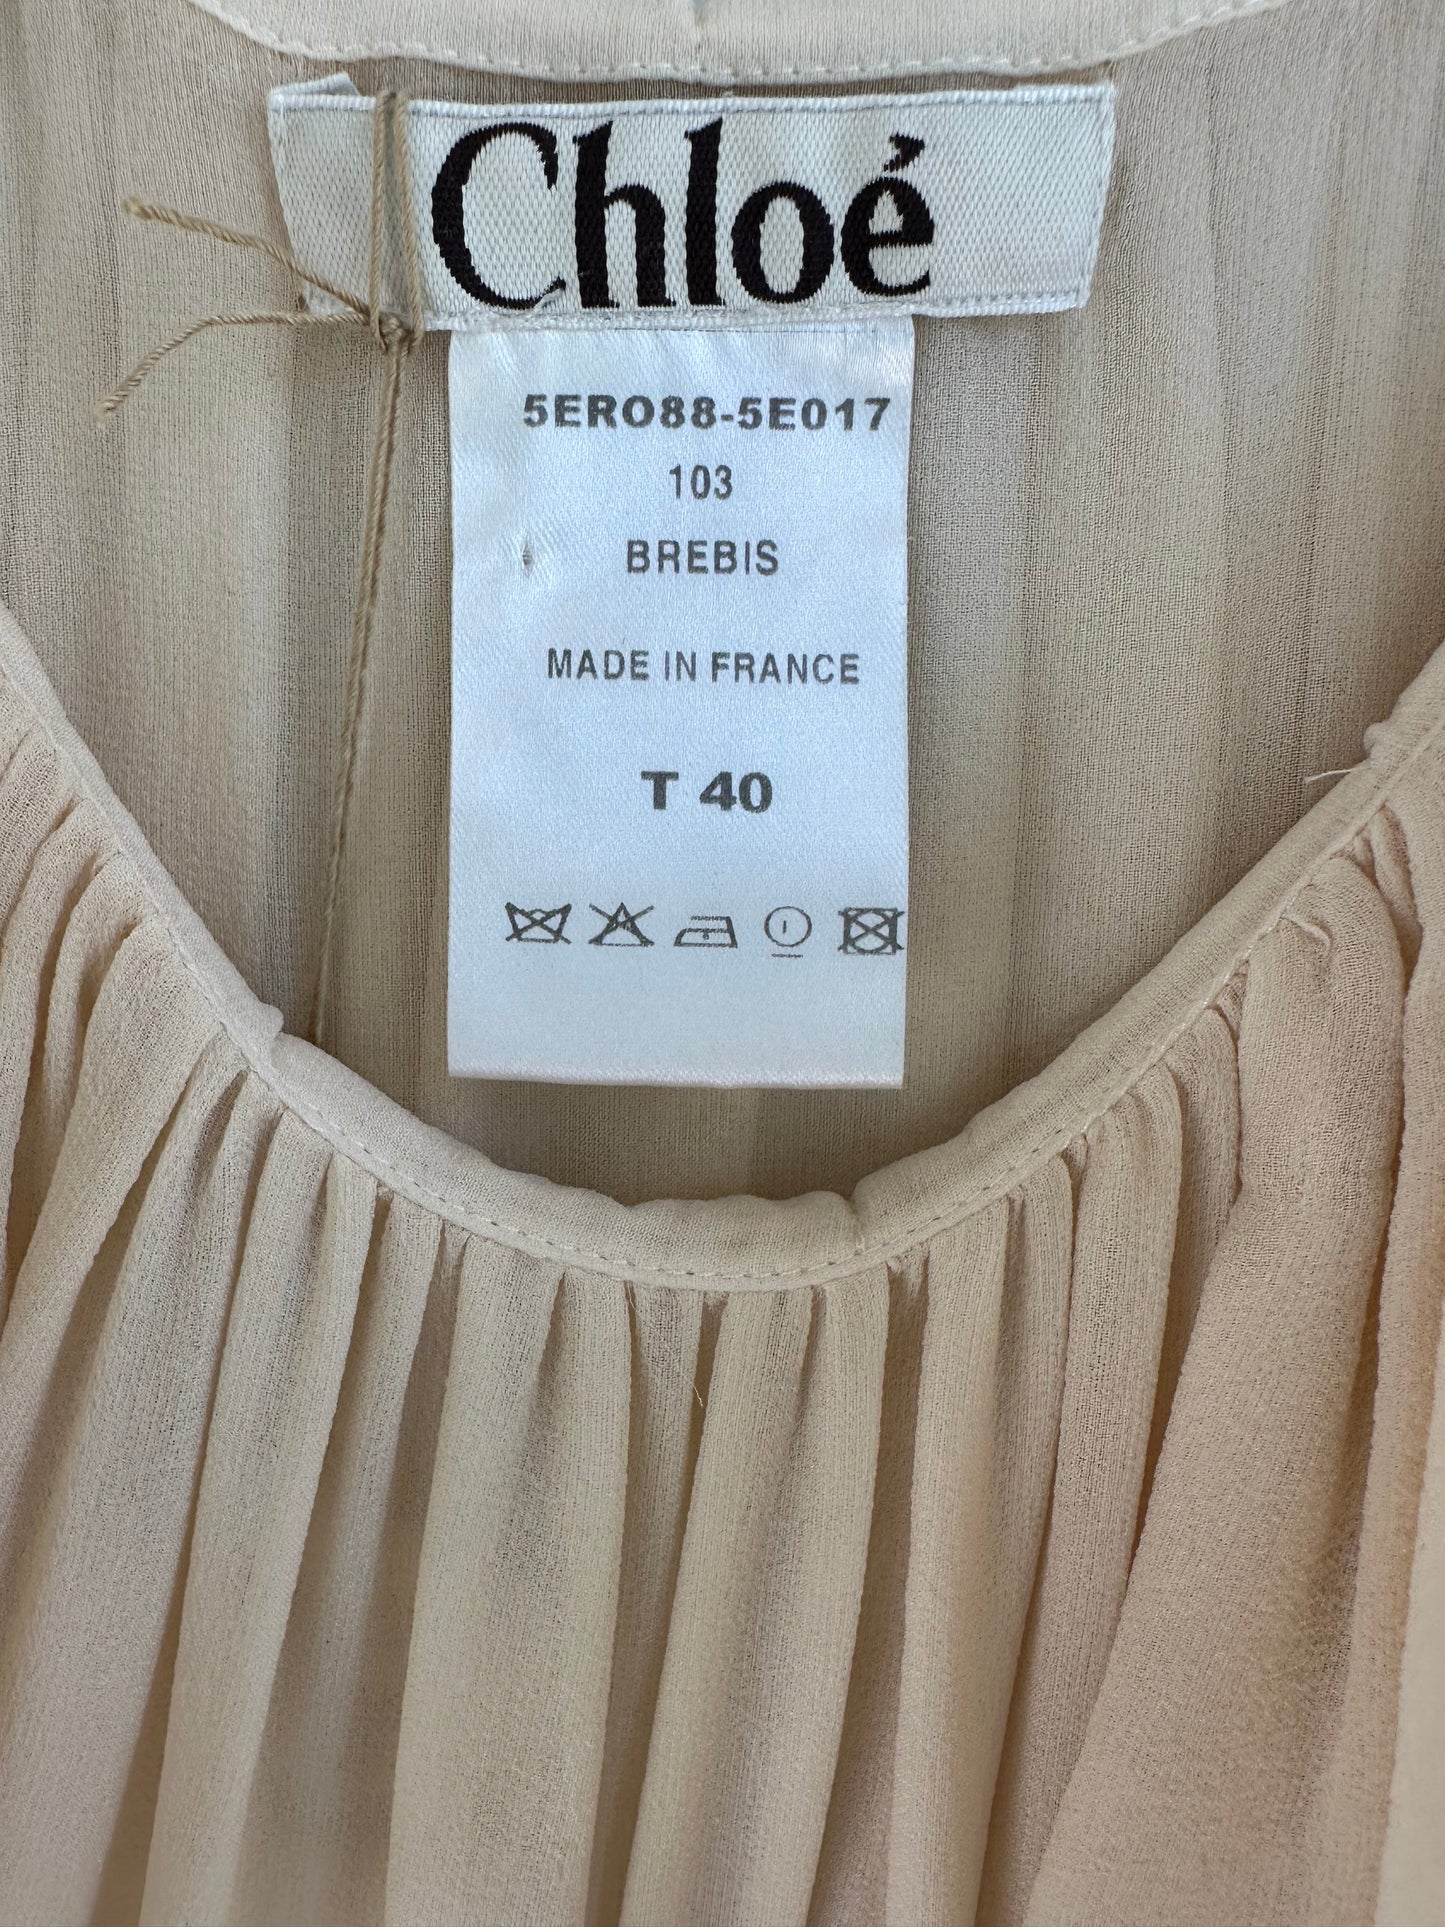 Chloé by Phoebe Philo 2005 Beaded Cream Silk Dress Size 40